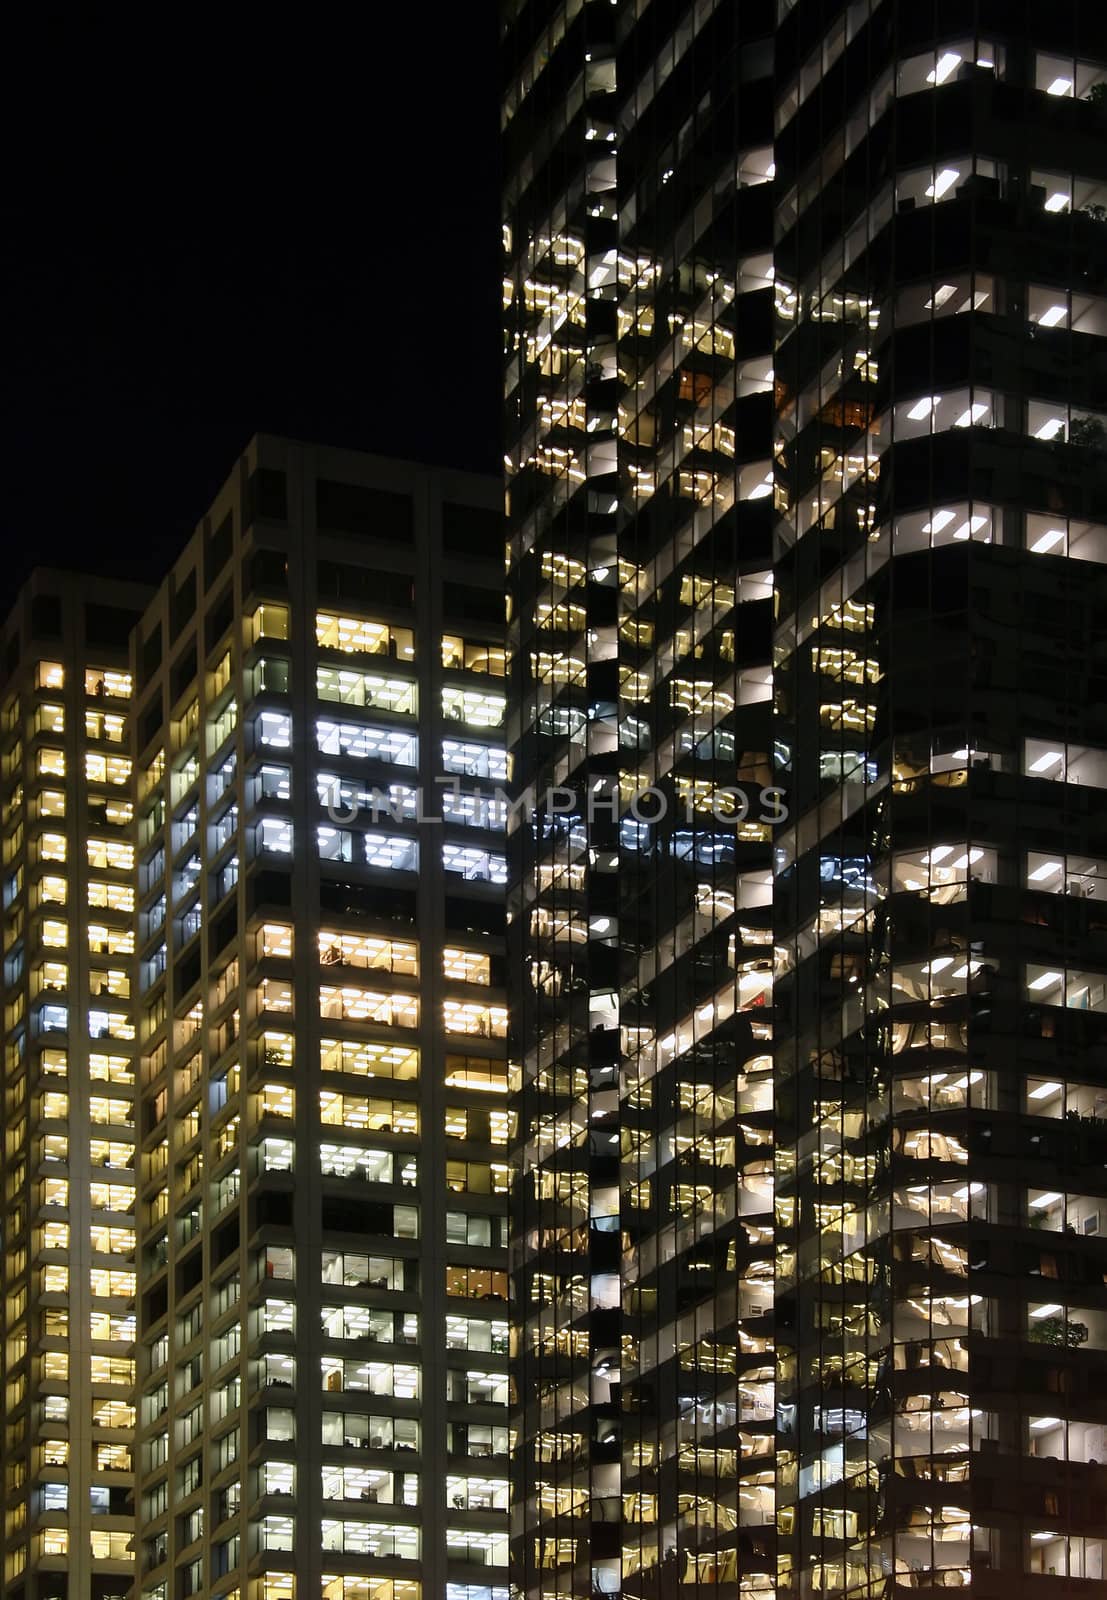 City At Night by Imagecom